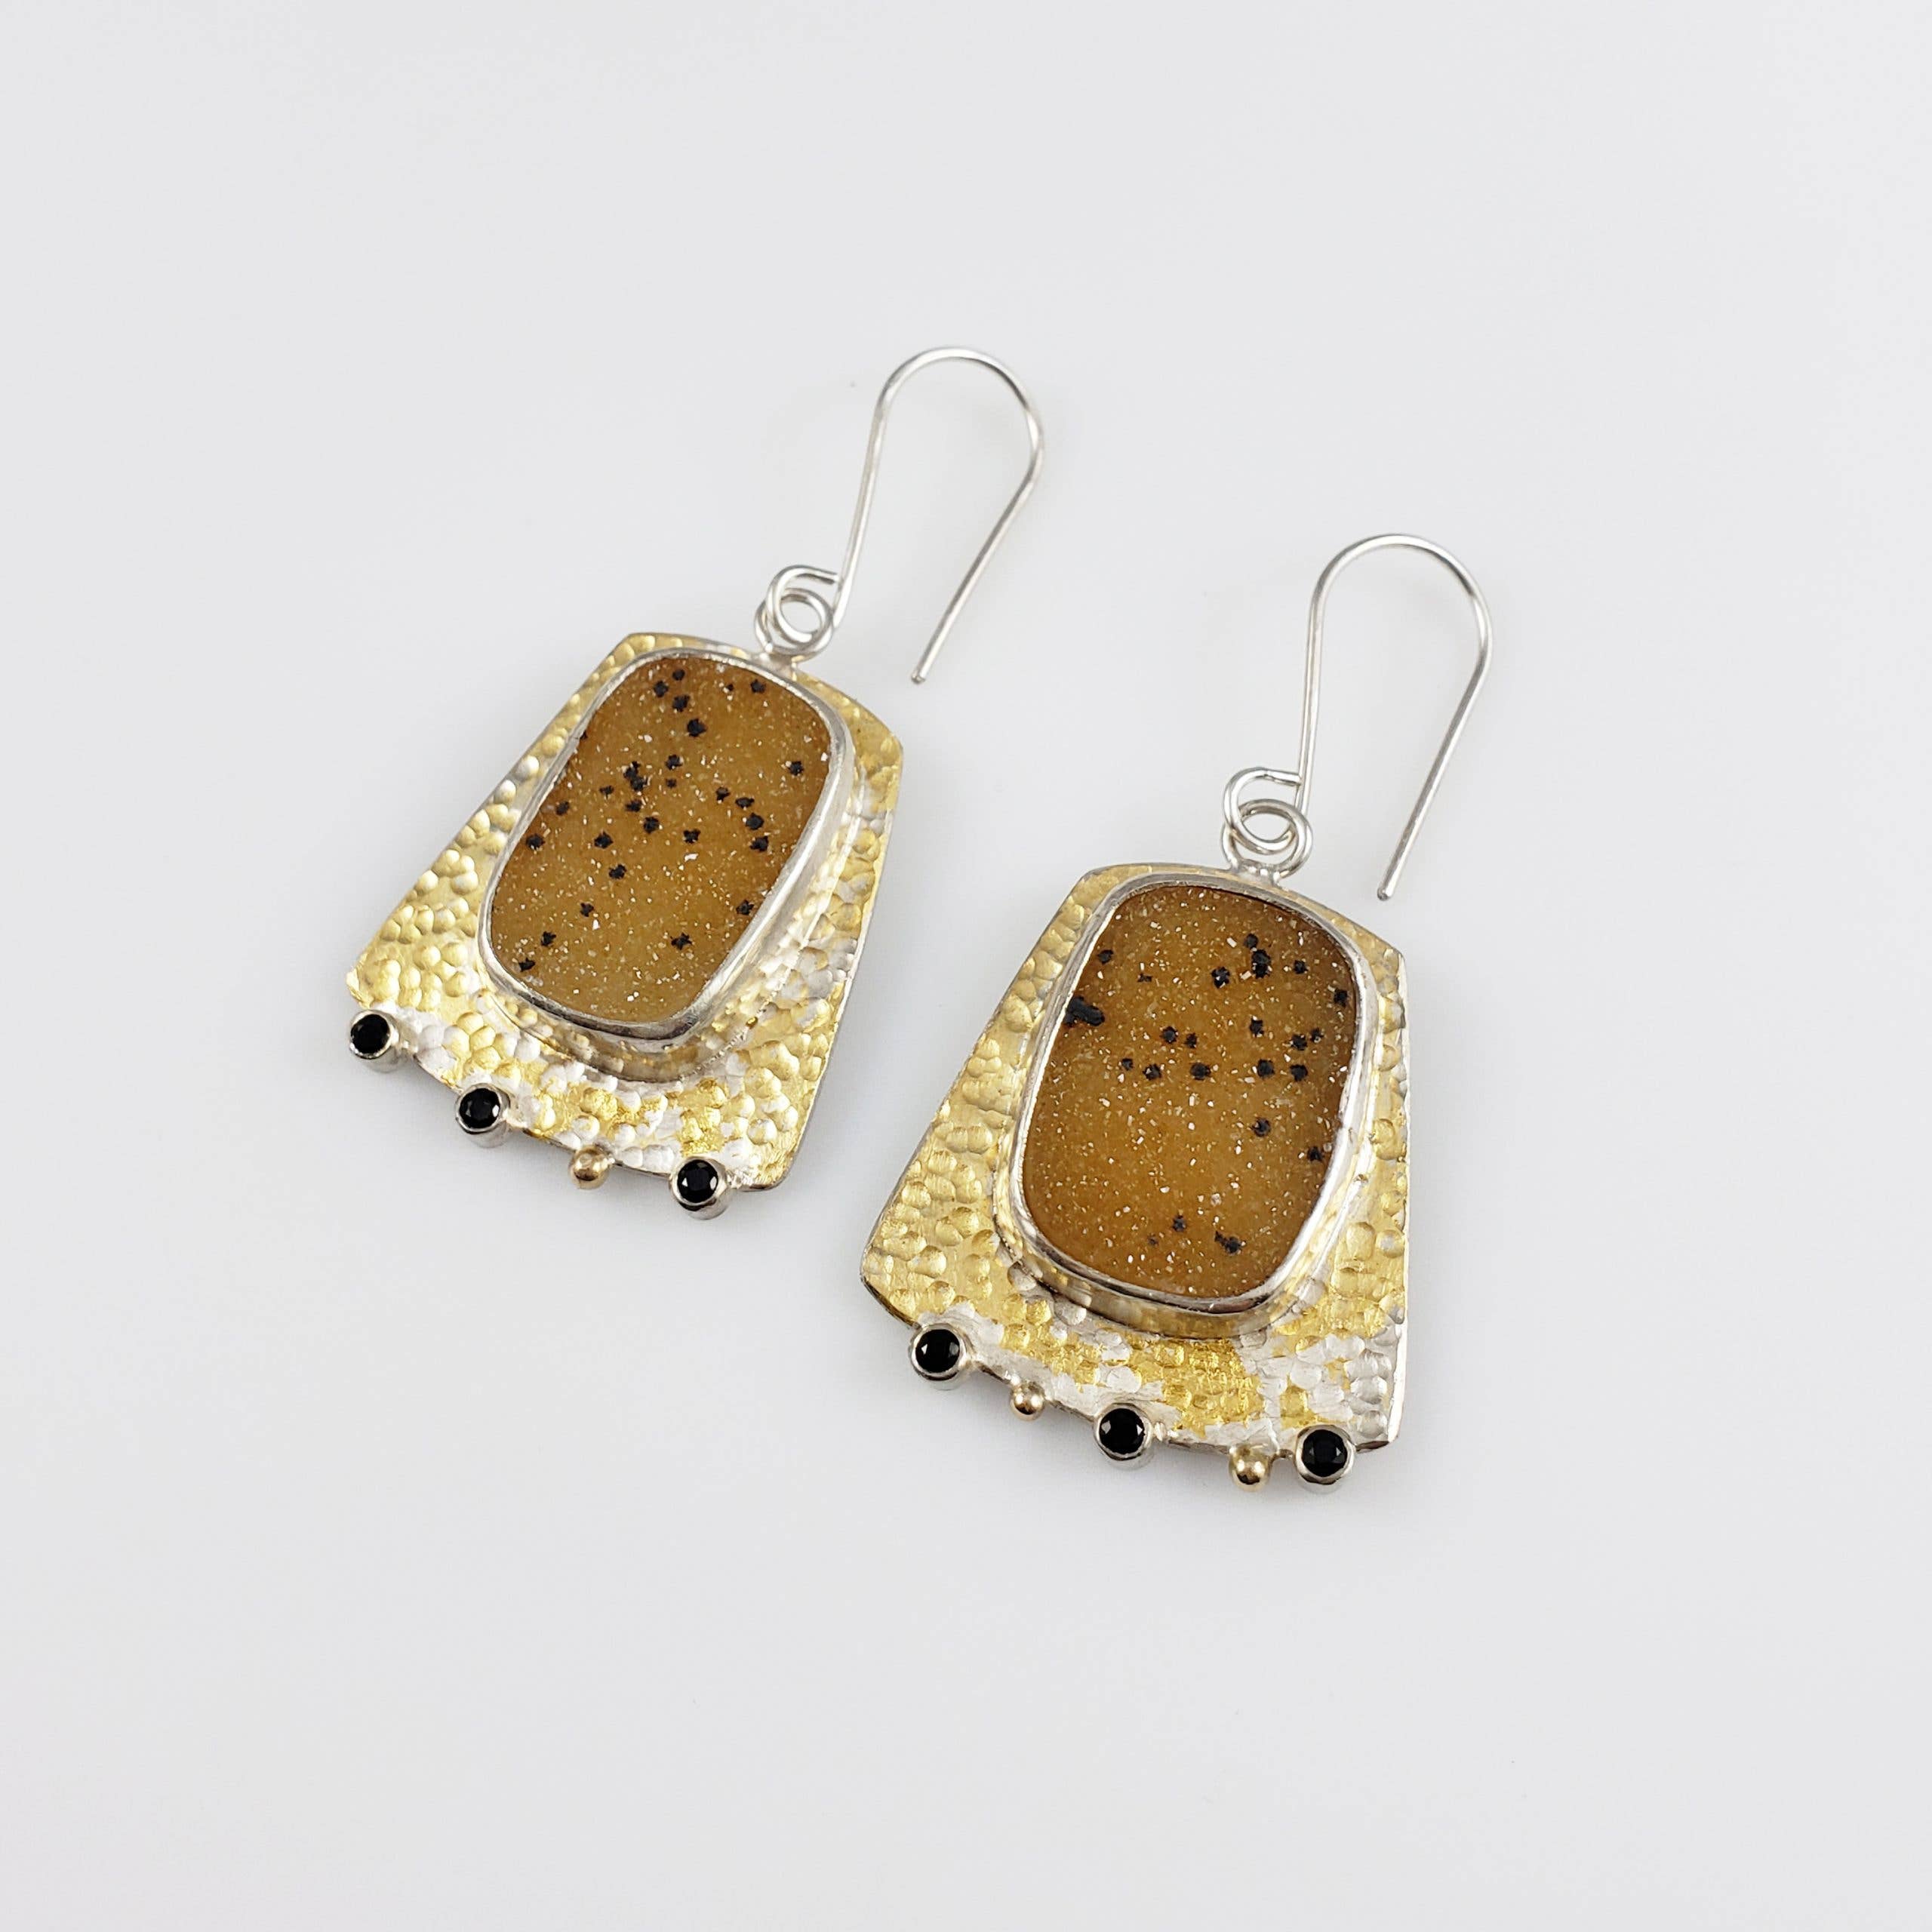 TALA Earrings in Dark Amethyst Handmade Polymer Clay Jewellery Gold Plated